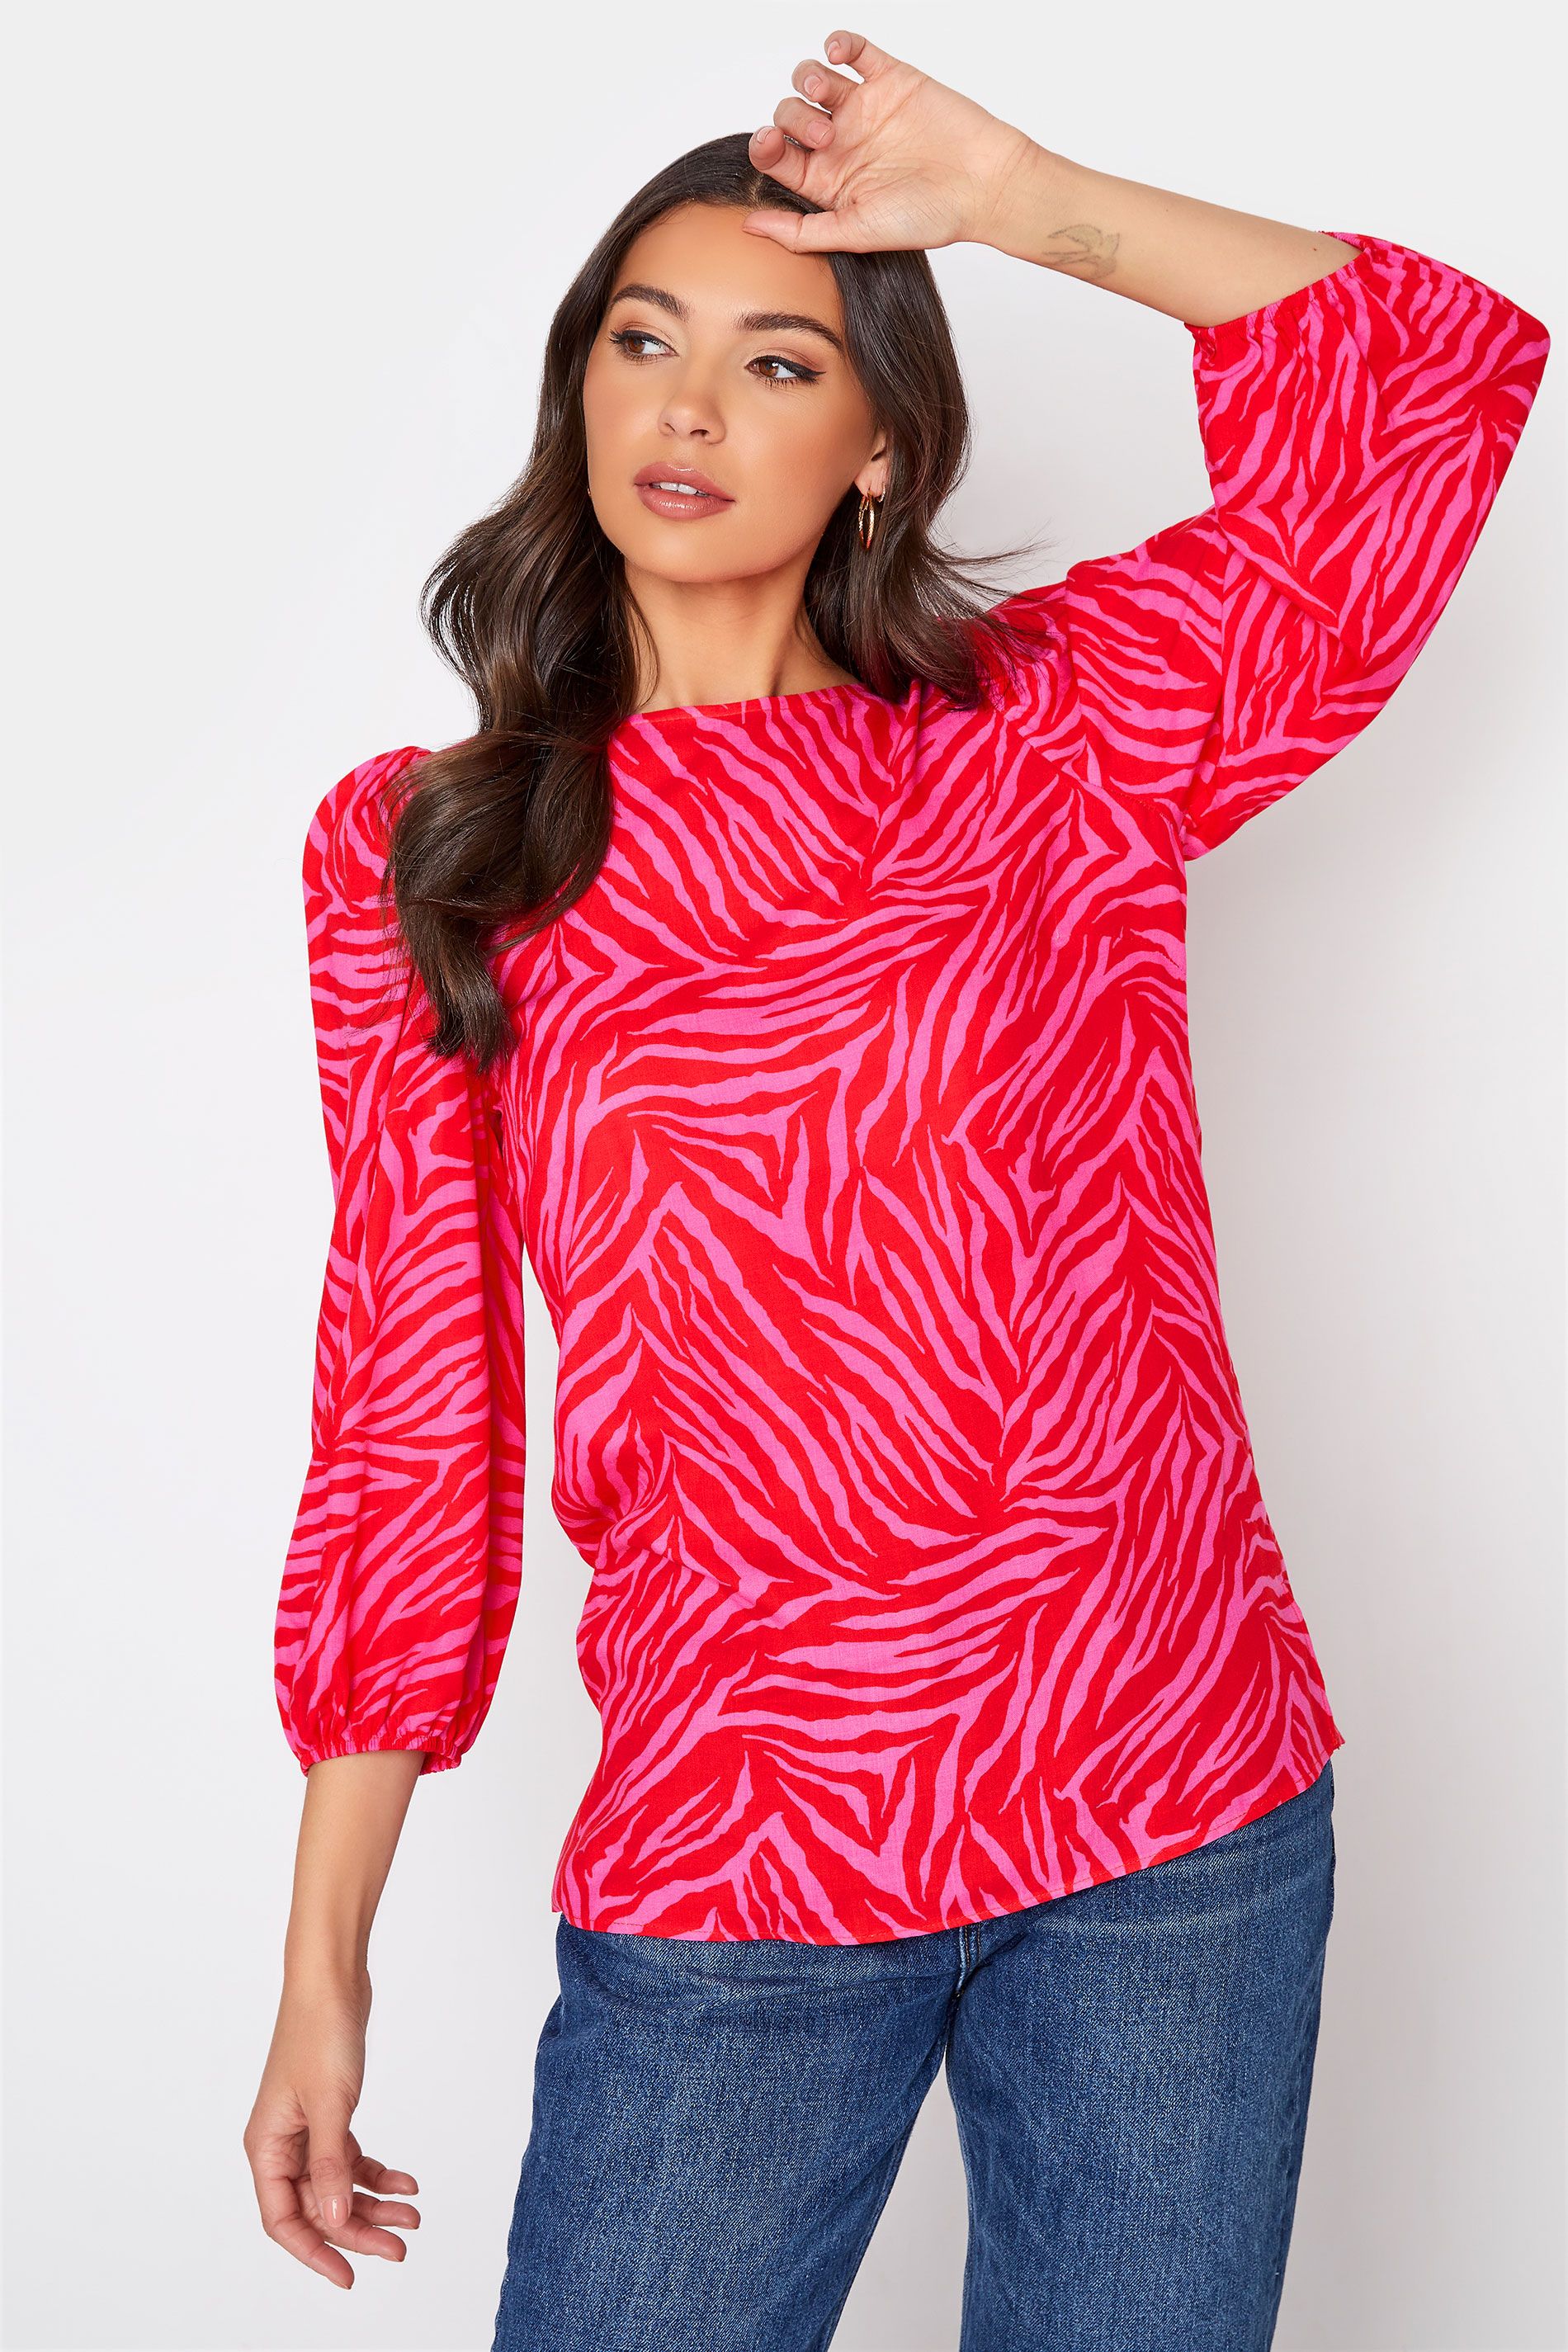 LTS Tall Bright Pink Zebra Print Puff Sleeve Top | Long Tall Sally